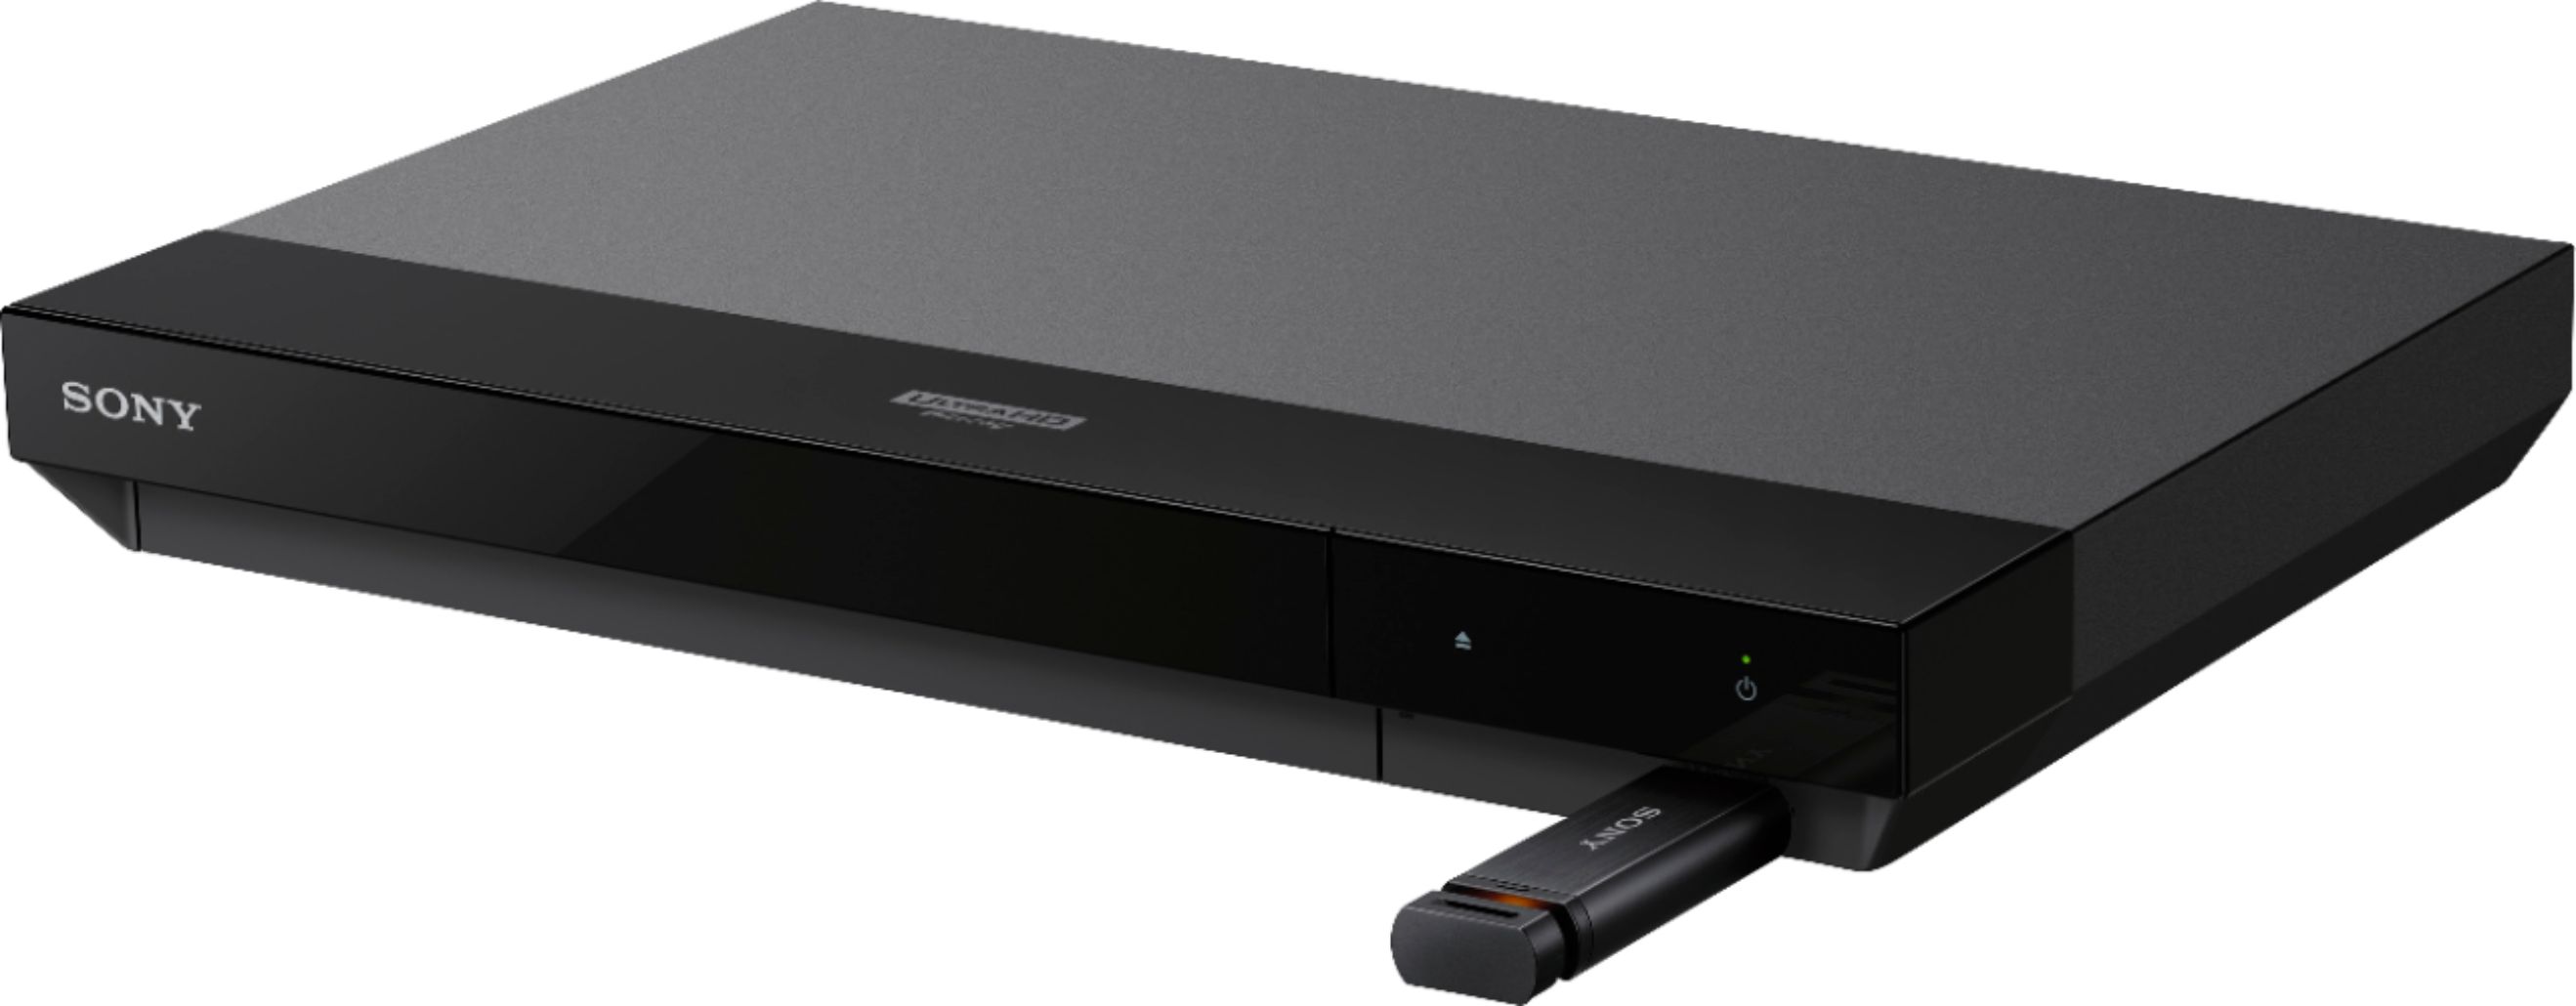 Sony UBP-X700/M Streaming 4K Ultra HD Blu-ray player with HDMI ...